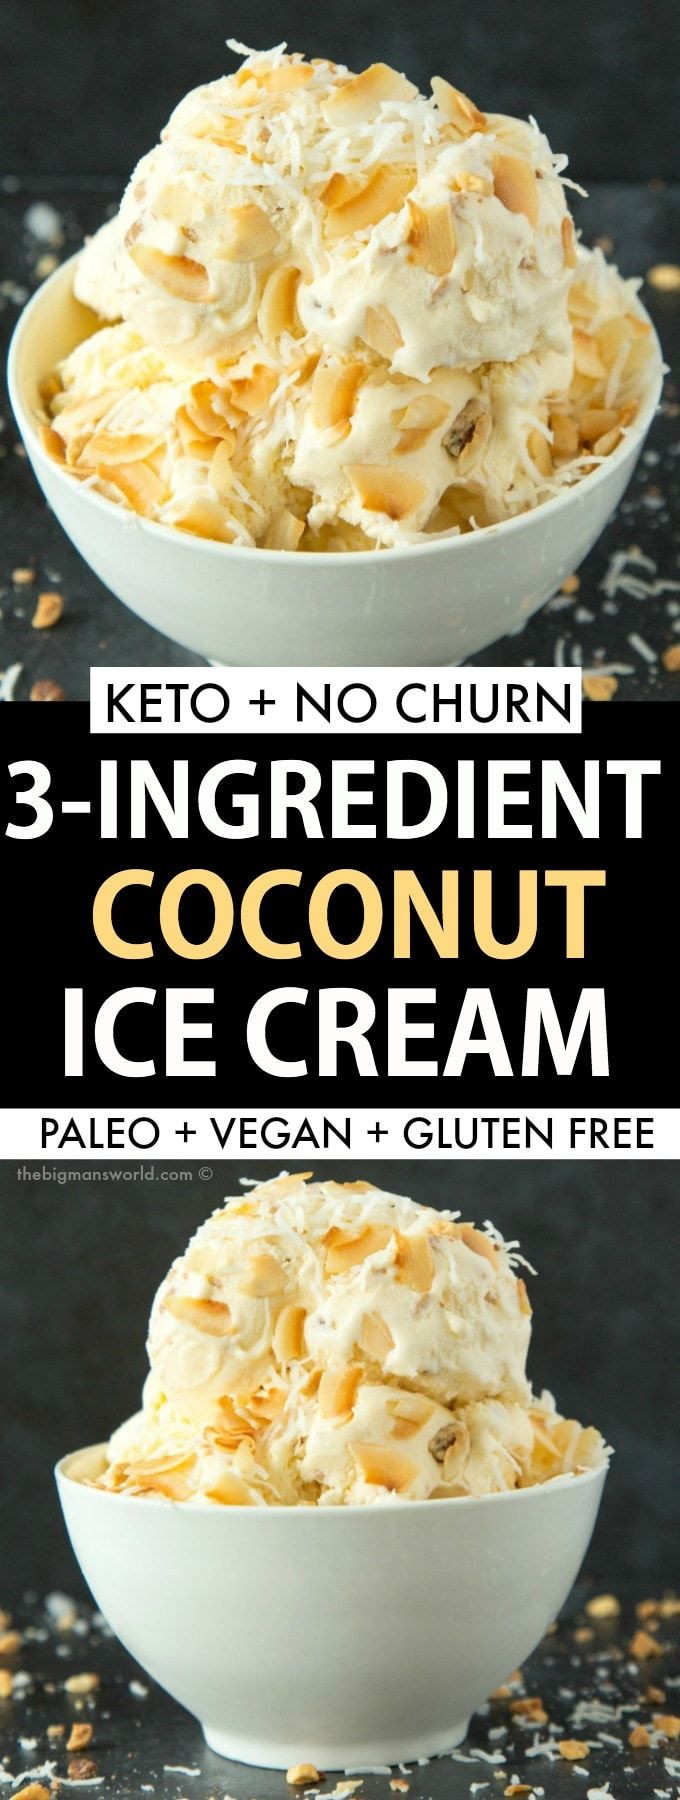 Coconut Cream Recipes Paleo
 3 Ingre nt Keto Coconut Ice Cream No churn vegan